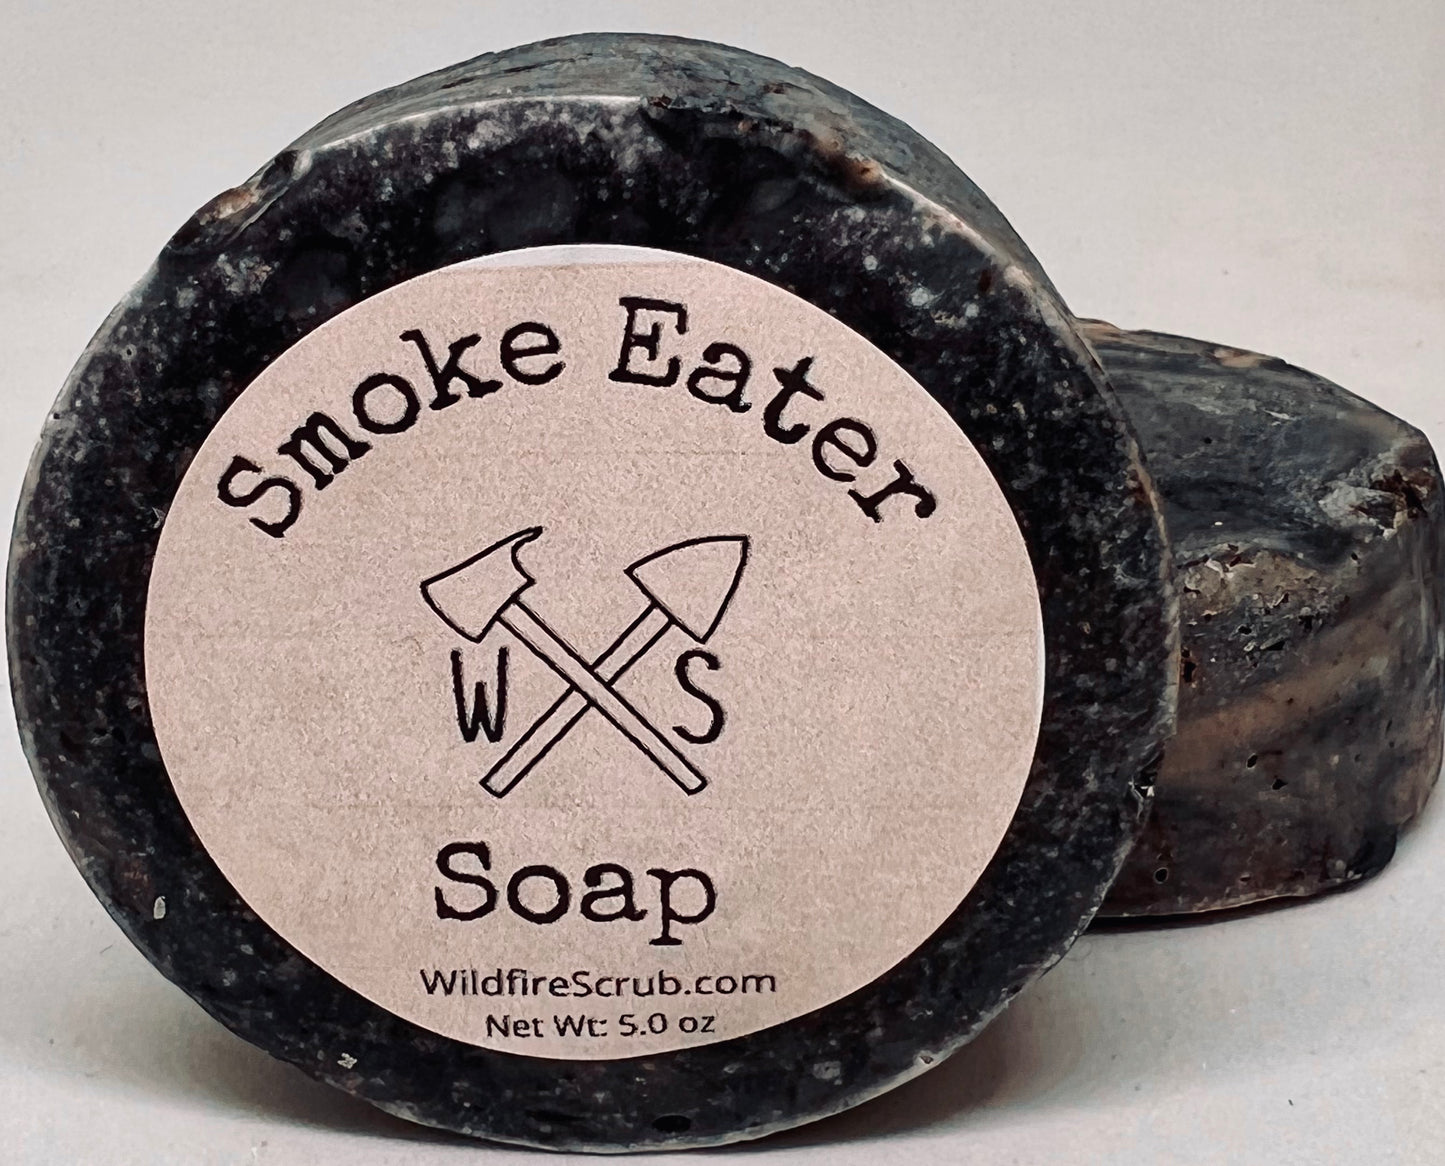 Smoke Eater Soap